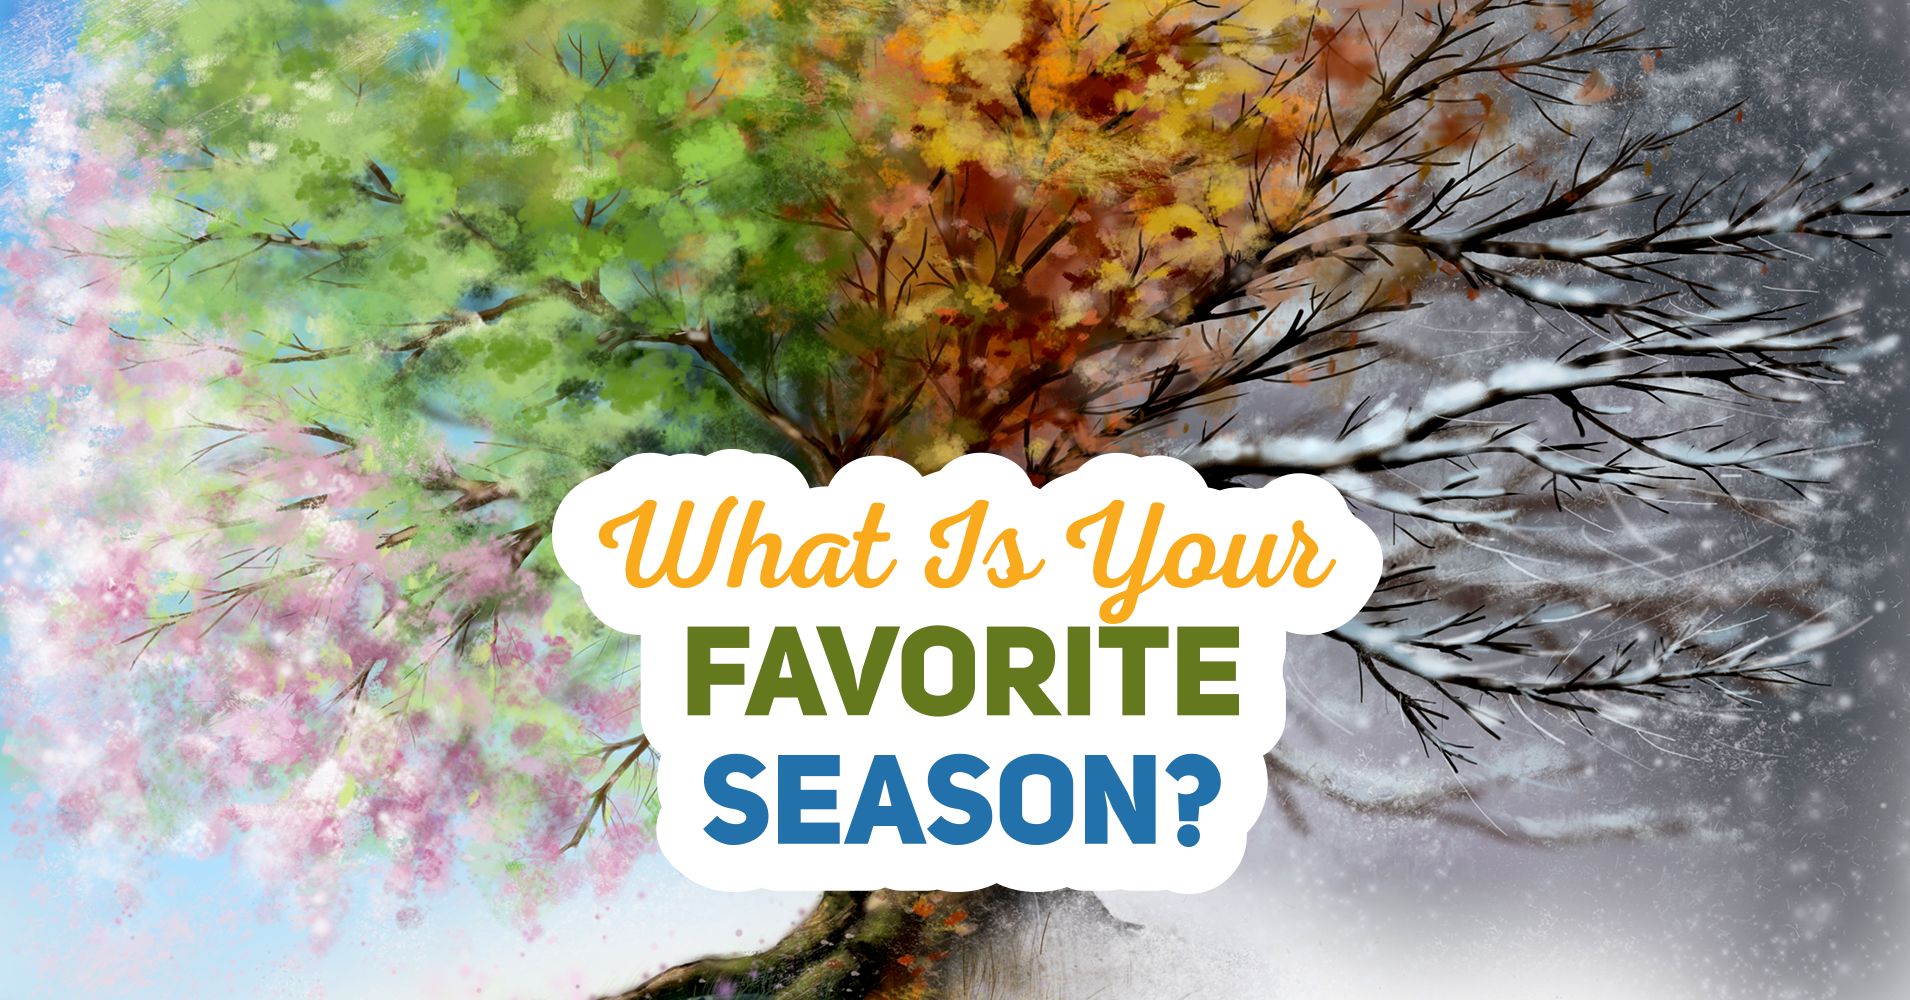 What Is Your Favorite Season? - Quiz - Quizony.com